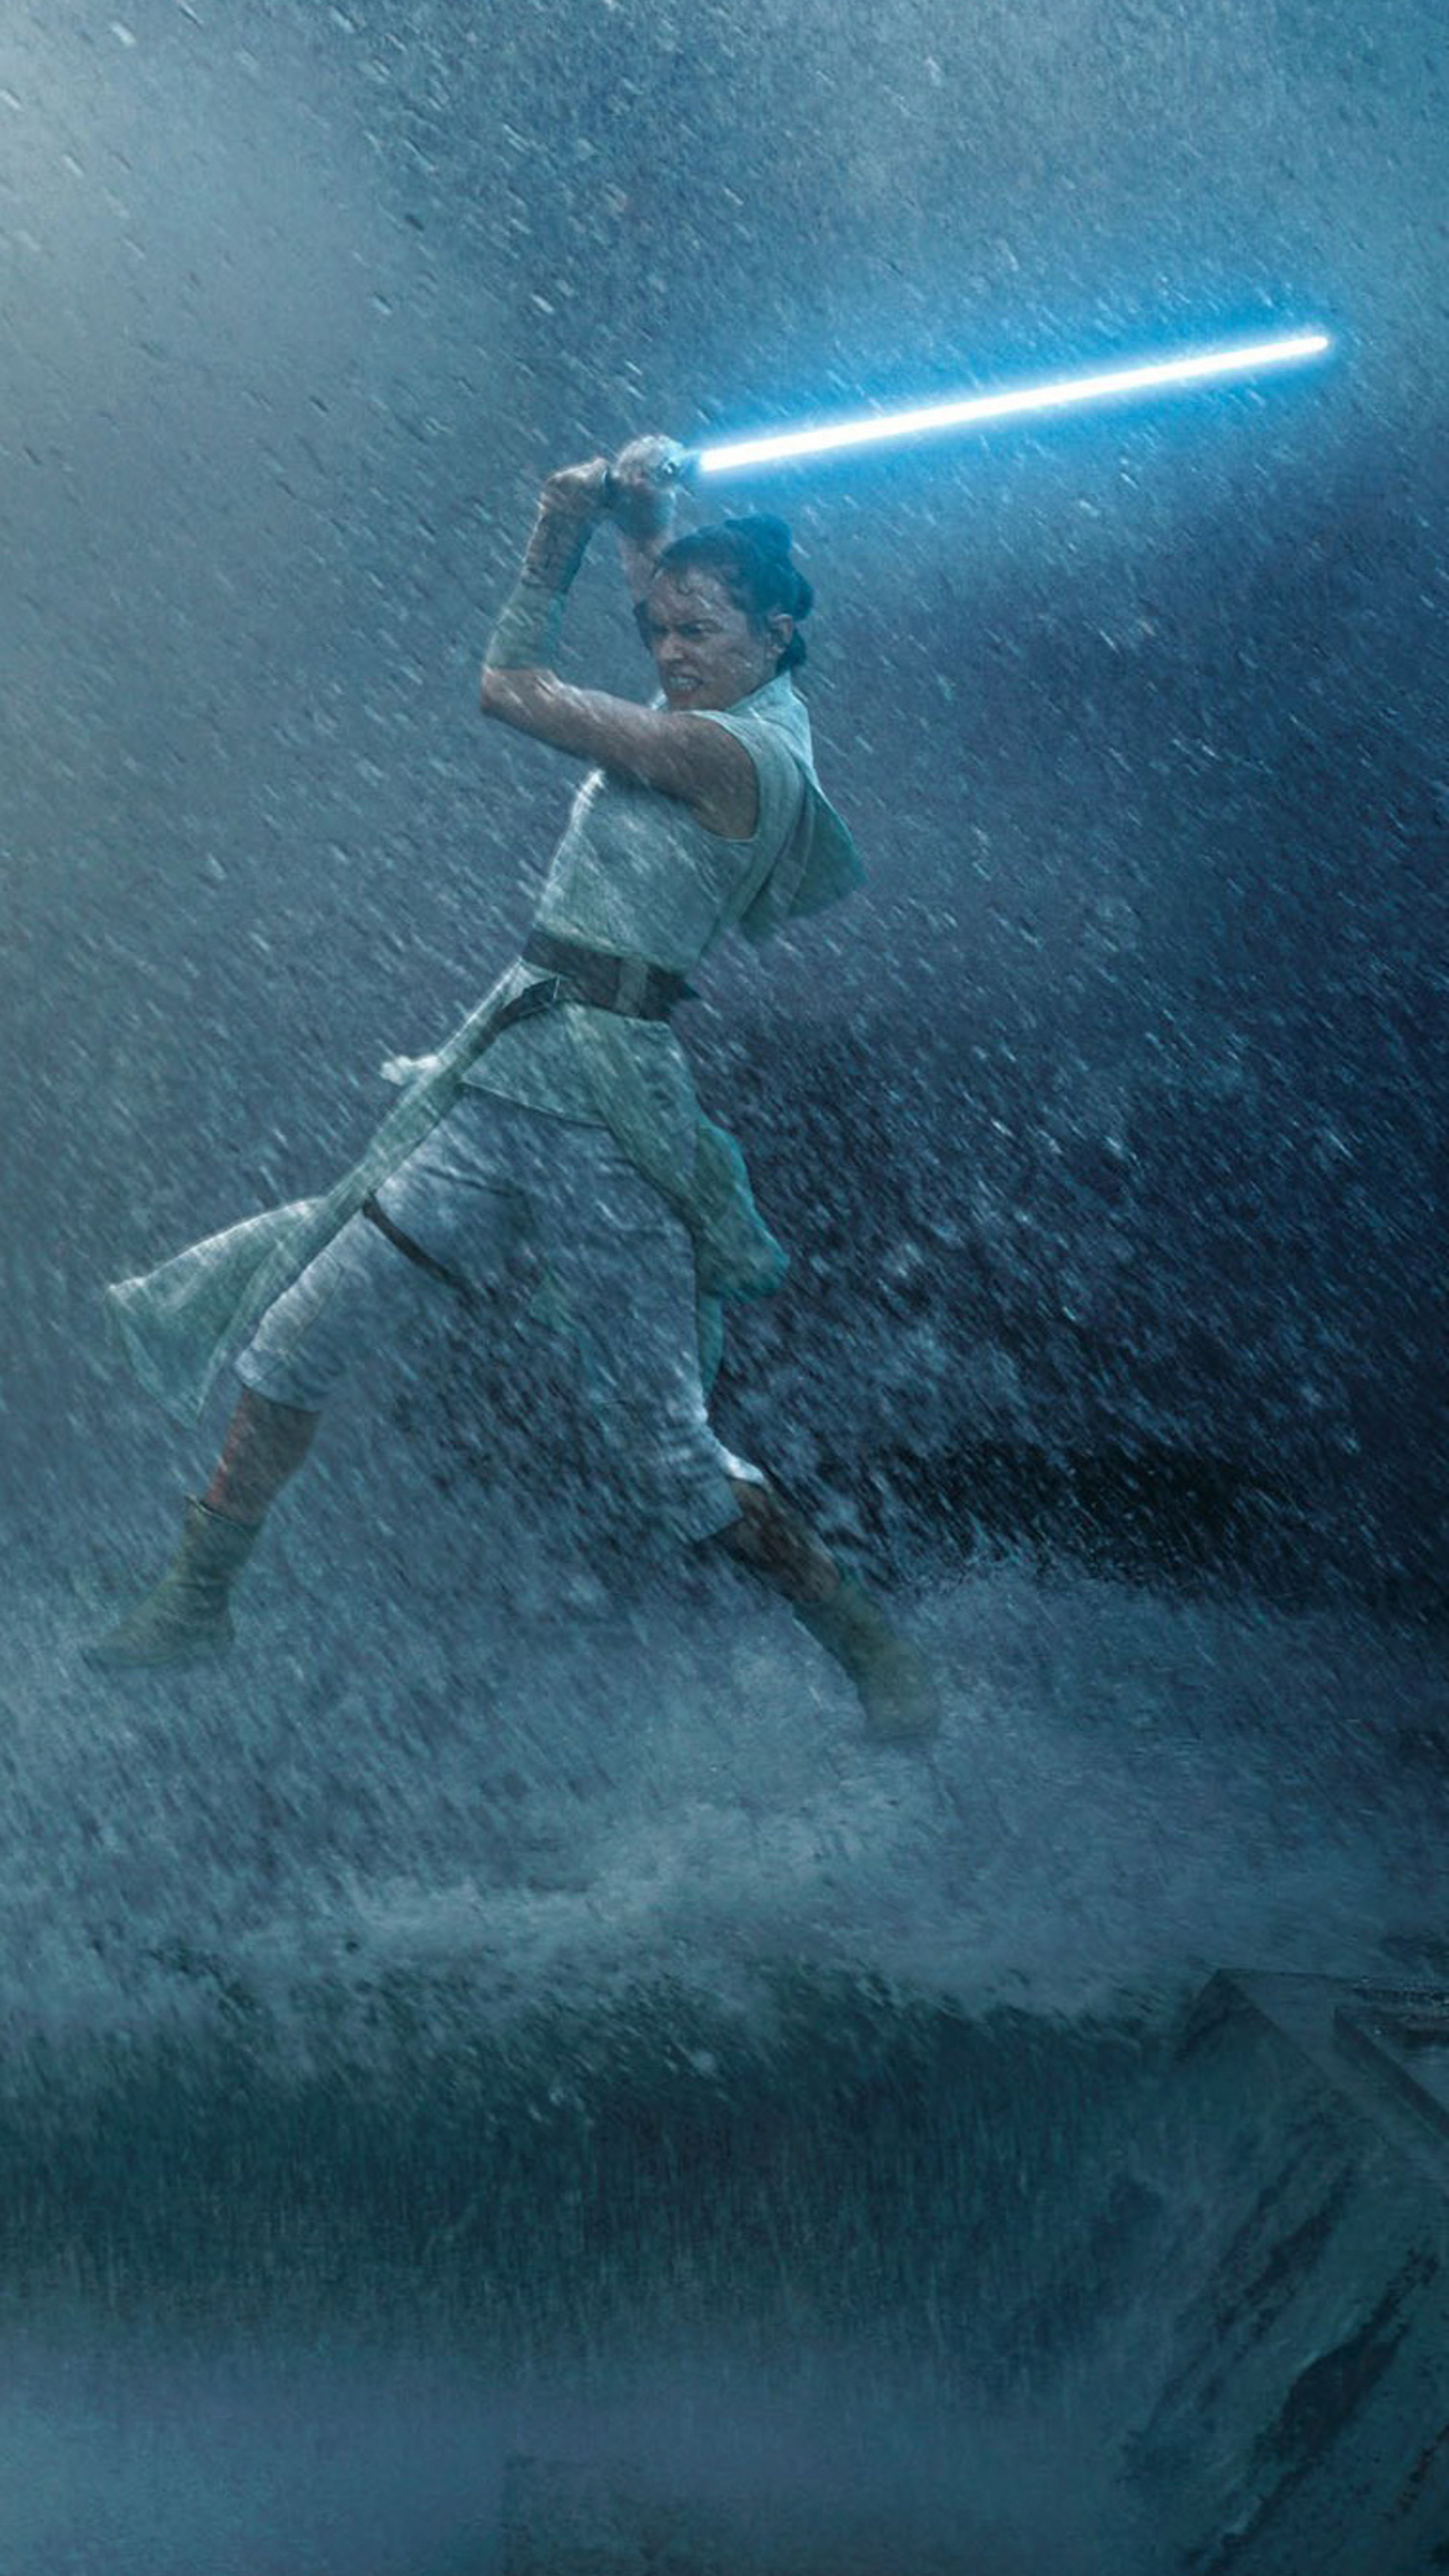 Rey (Star Wars), Rise of Skywalker showdown, Sony Xperia wallpaper, HD 4K image, 2160x3840 4K Phone